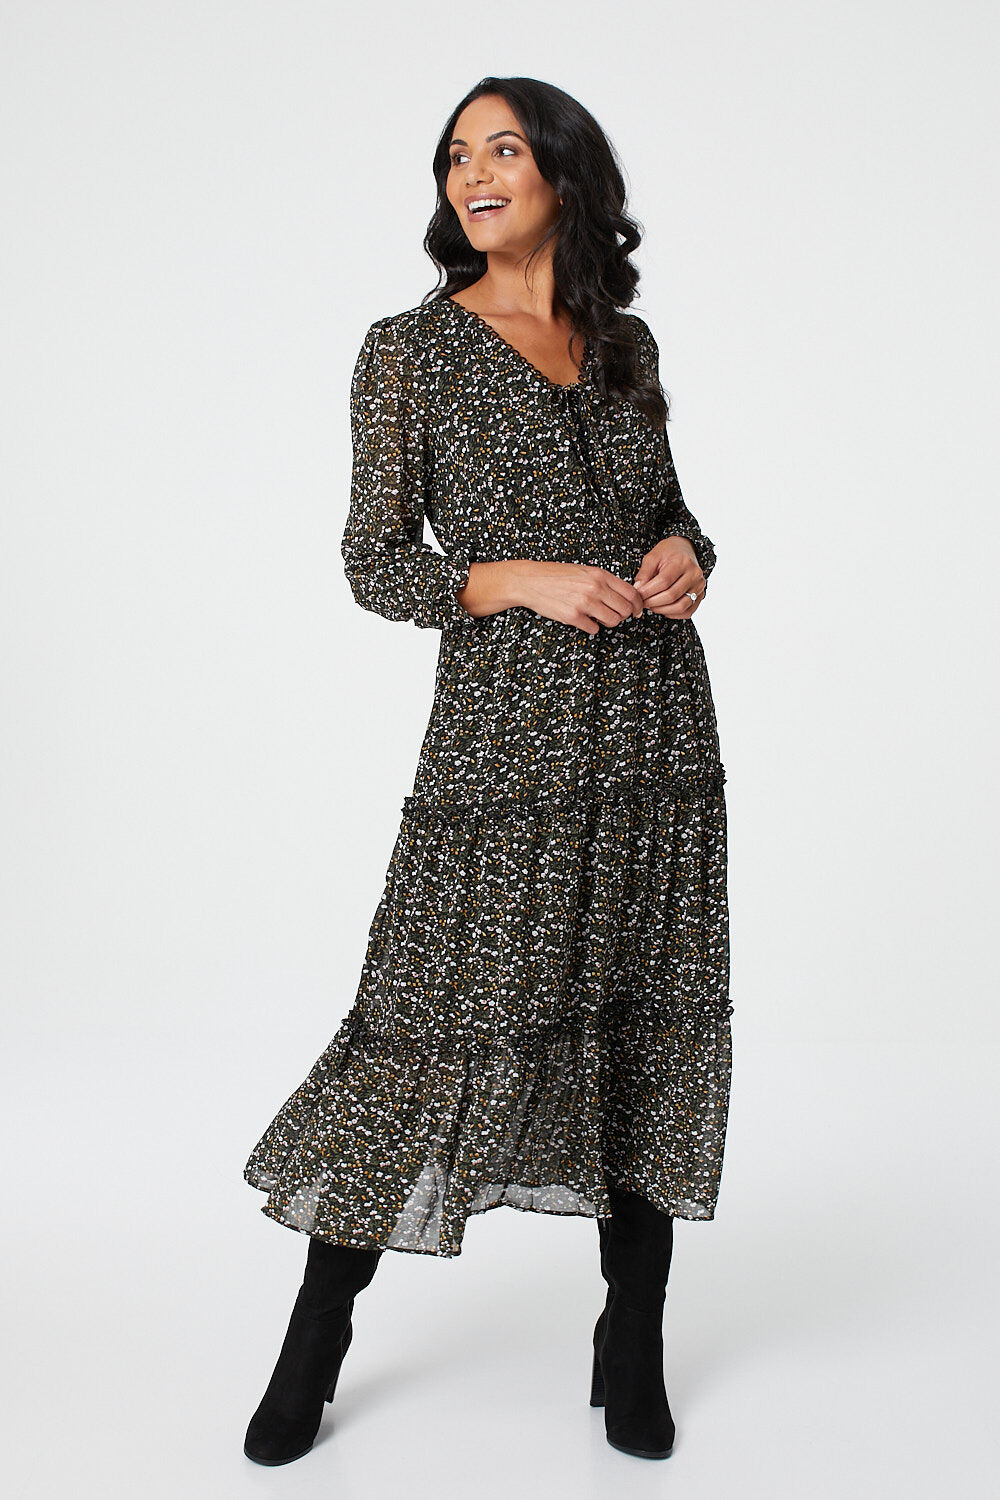 Izabel London Black - Floral Tie Front Tiered Midi Dress, Size: 16